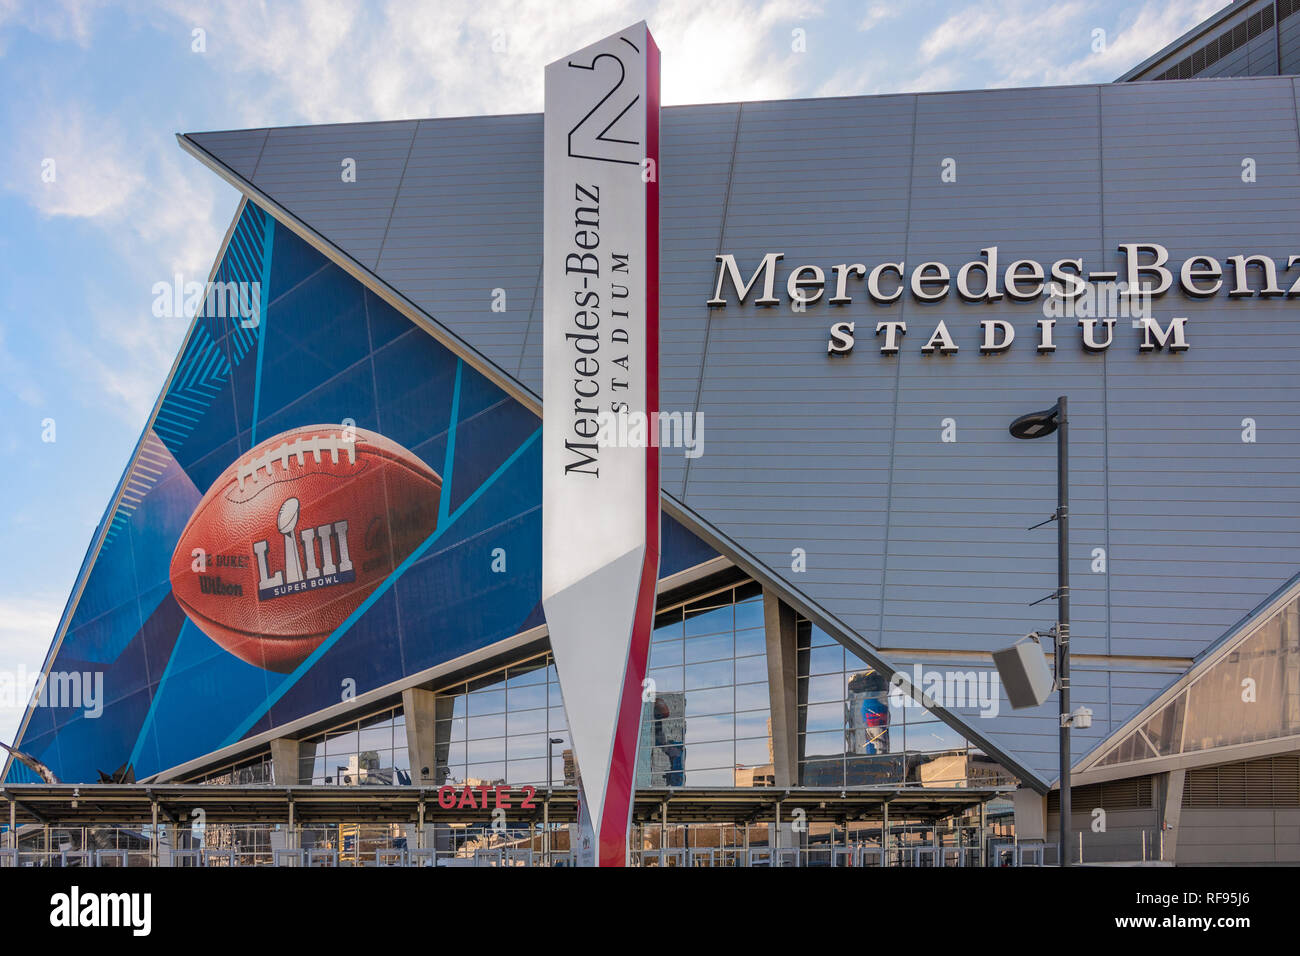 Mercedes-Benz Stadium in Atlanta, Georgia, host of the NFL's Super Bowl LIII. Stock Photo